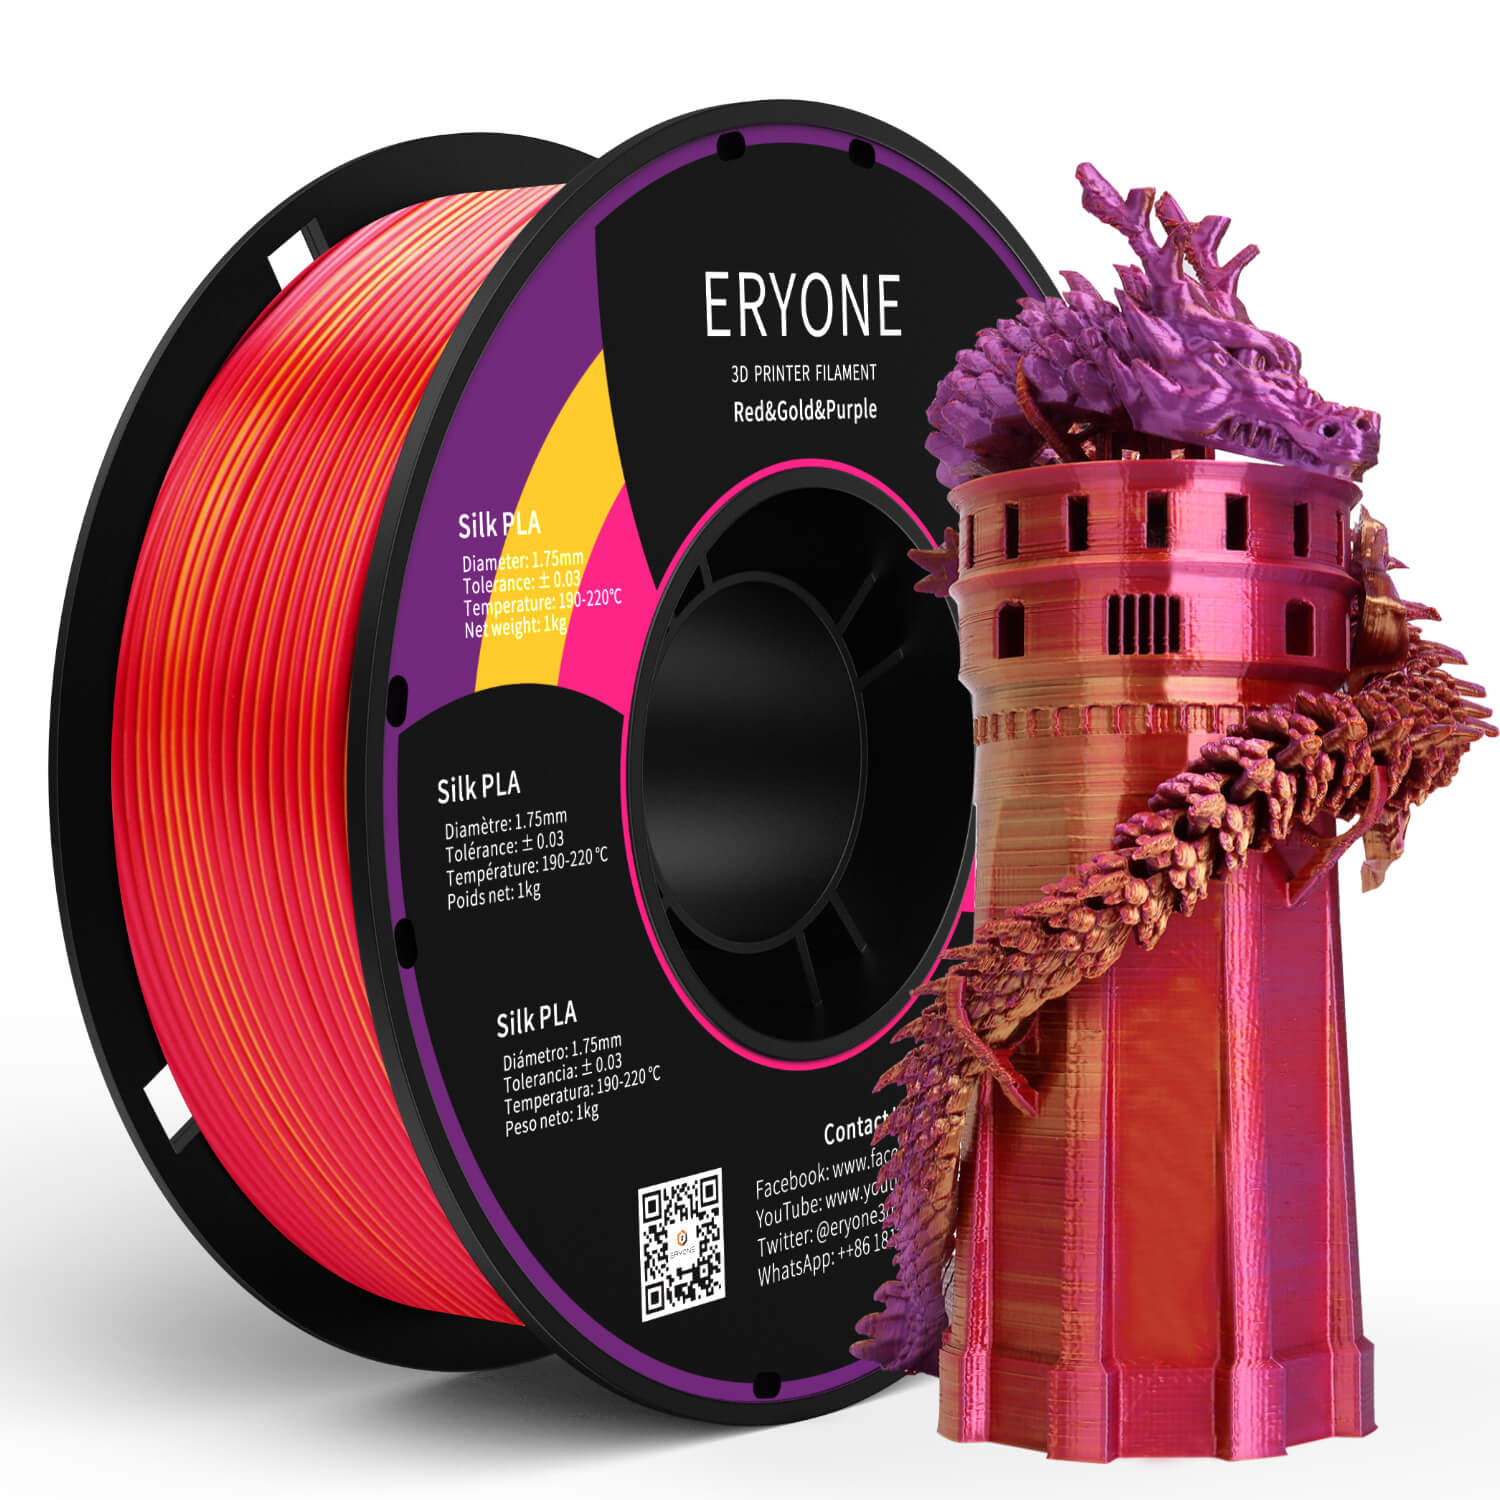 Eryone Silk PLA Filament 1.75mm, Silky Shiny 3D Printing Material